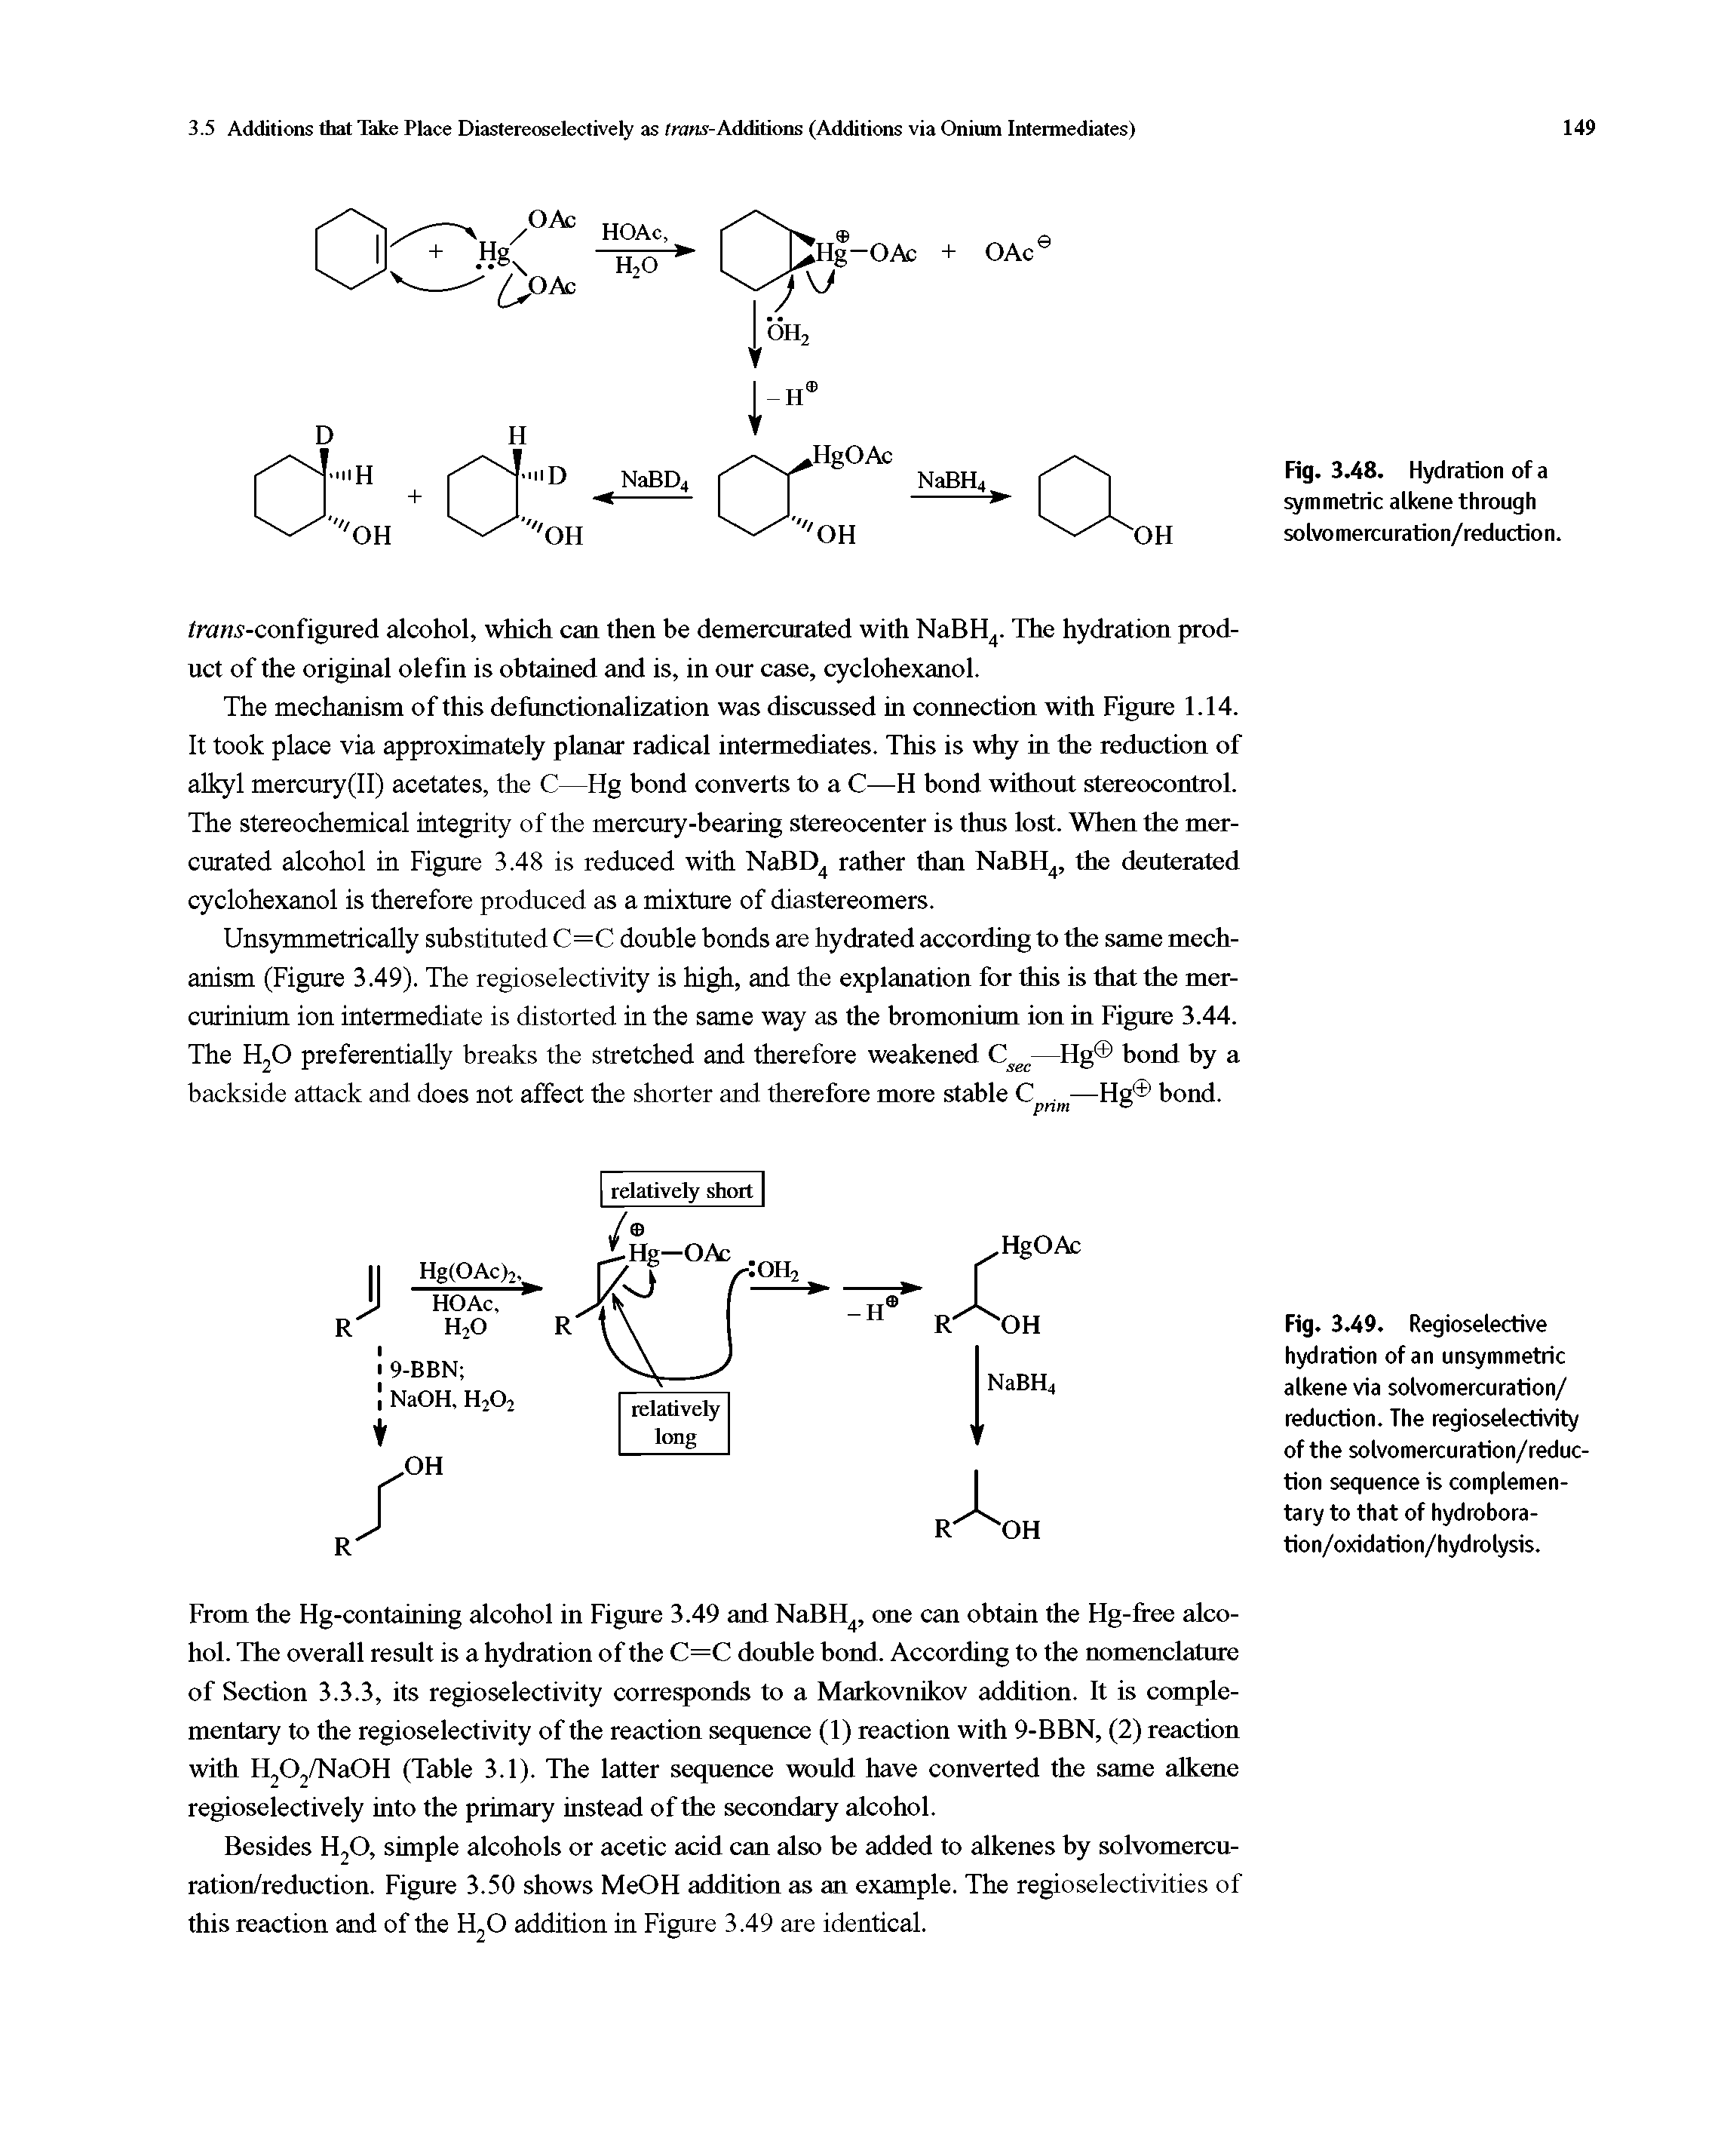 Fig. 3.48. Hydration of a symmetric alkene through solvomercuration/reduction.